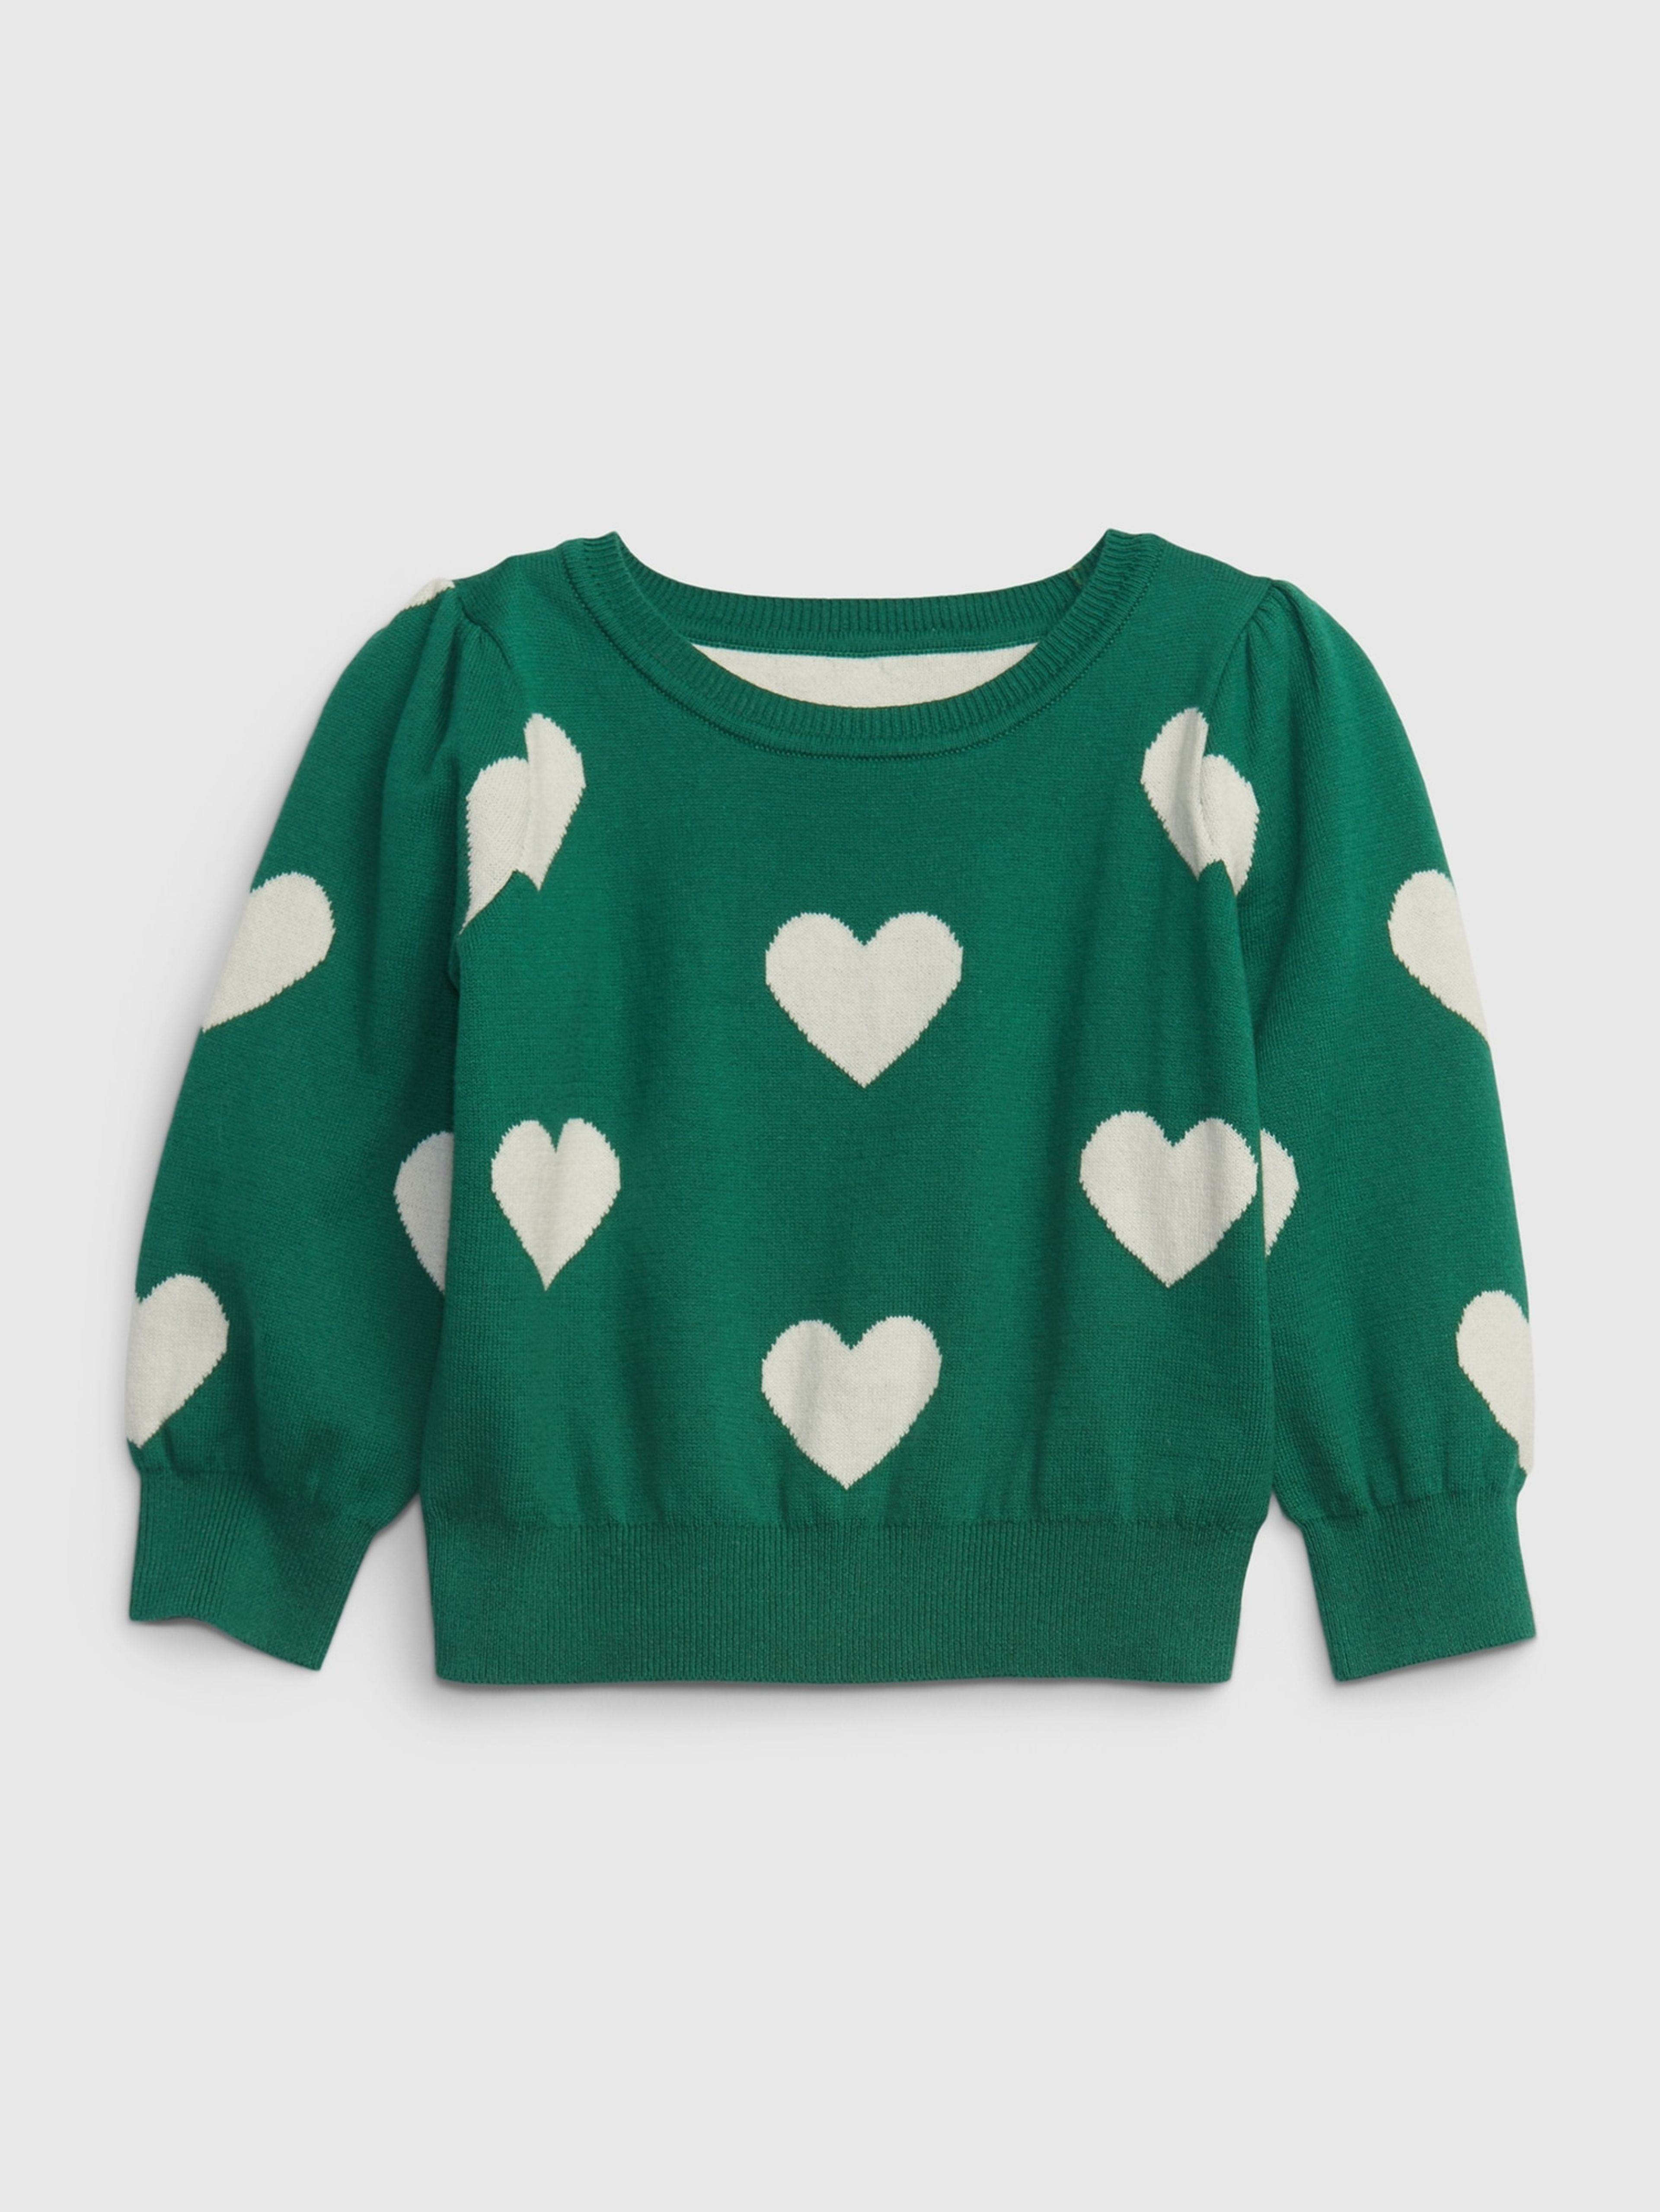 Detský sveter so vzorom srdca